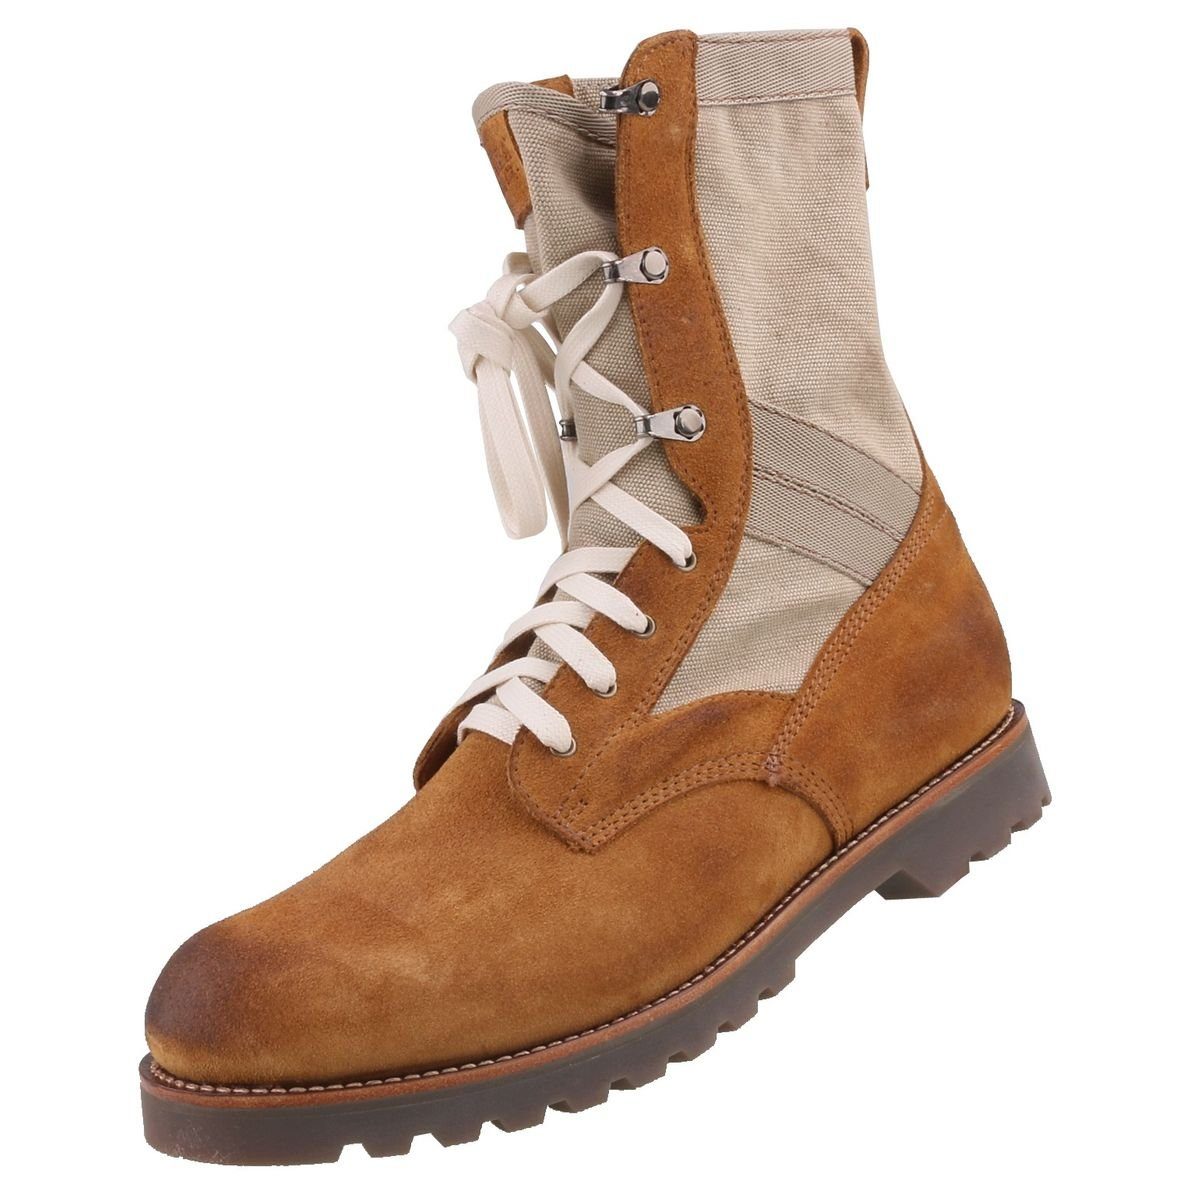 Sendra Boots »17953-Serr. Camello Us. Marron Tela Tye Dye C/13« Stiefel  online kaufen | OTTO